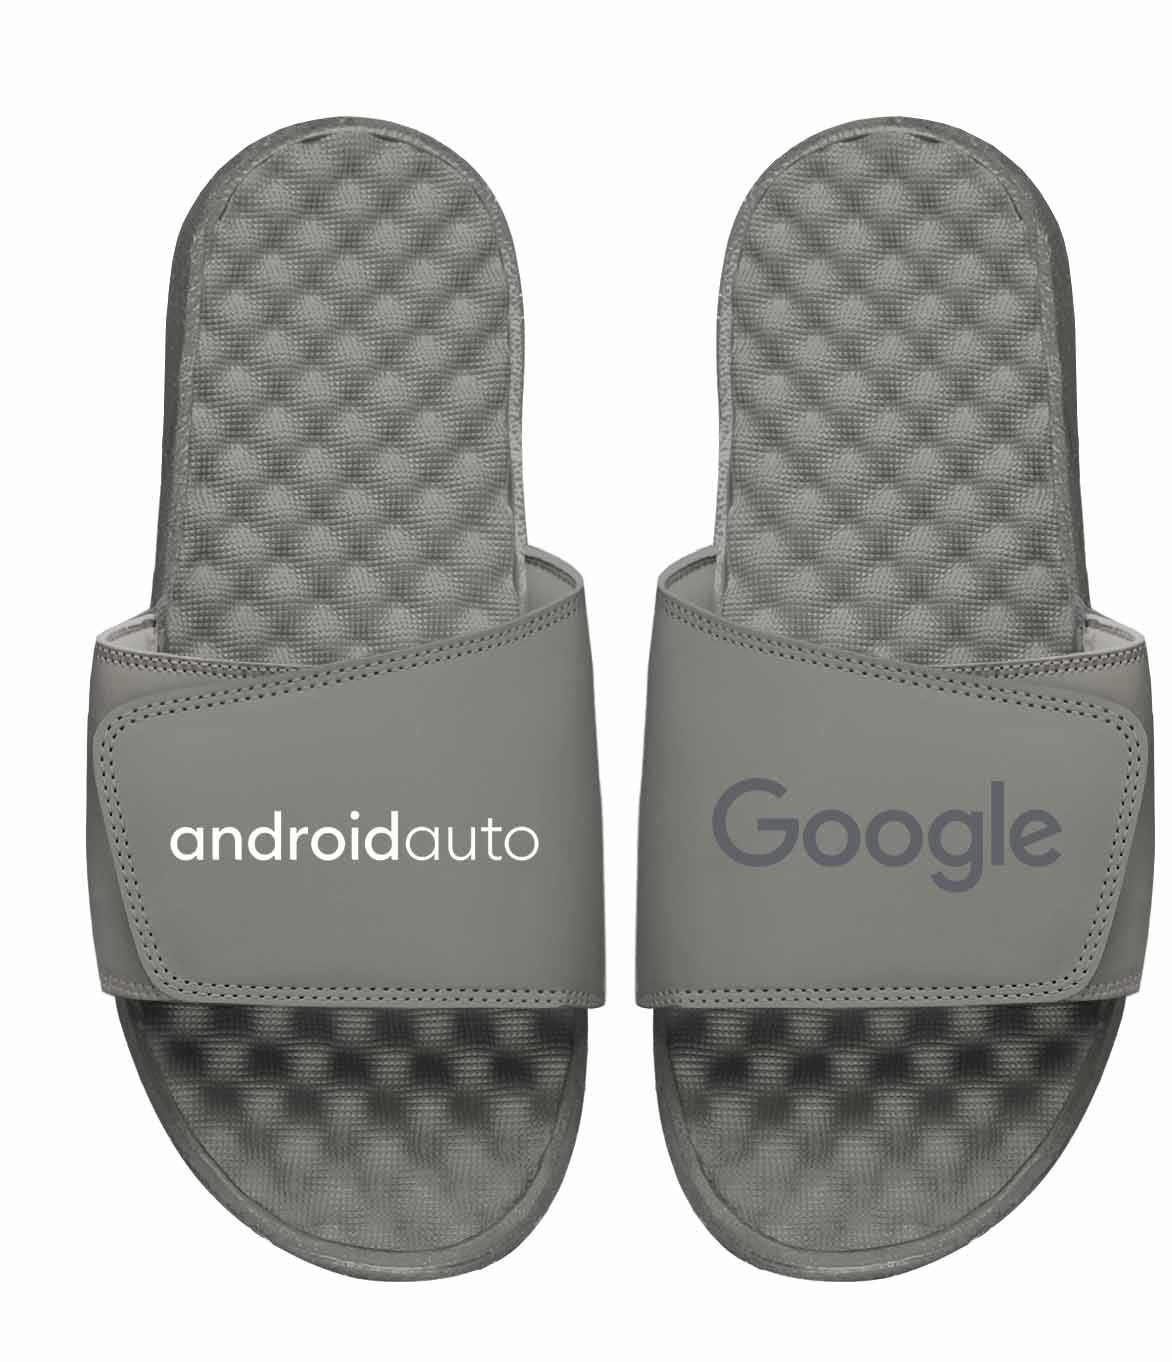 Android Auto IV Slides